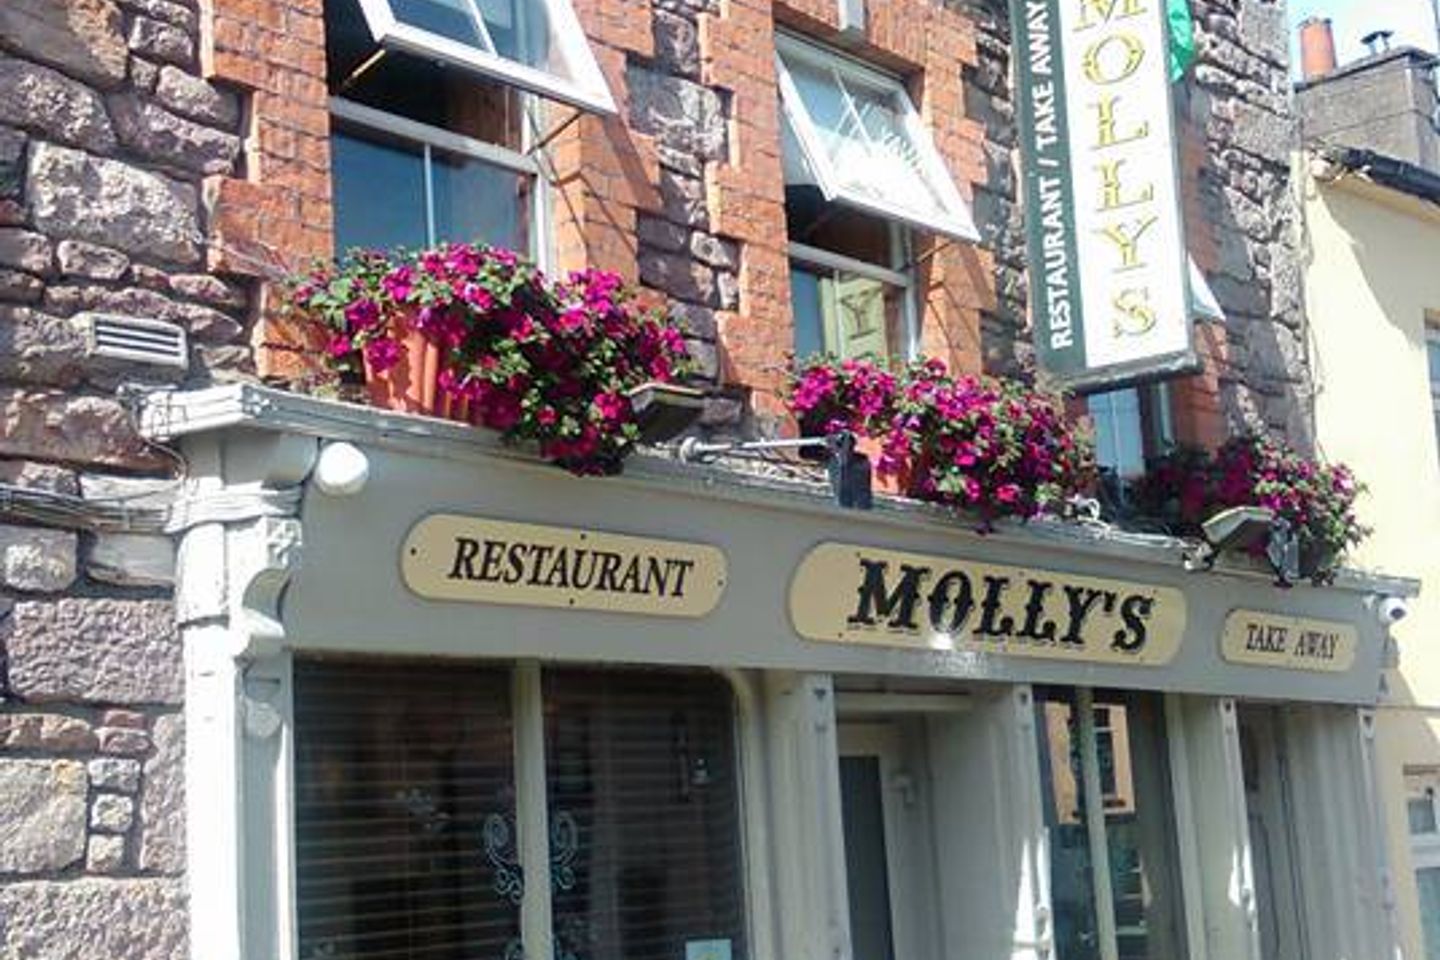 "Molly's Restaurant", Kilfinane, Co. Limerick